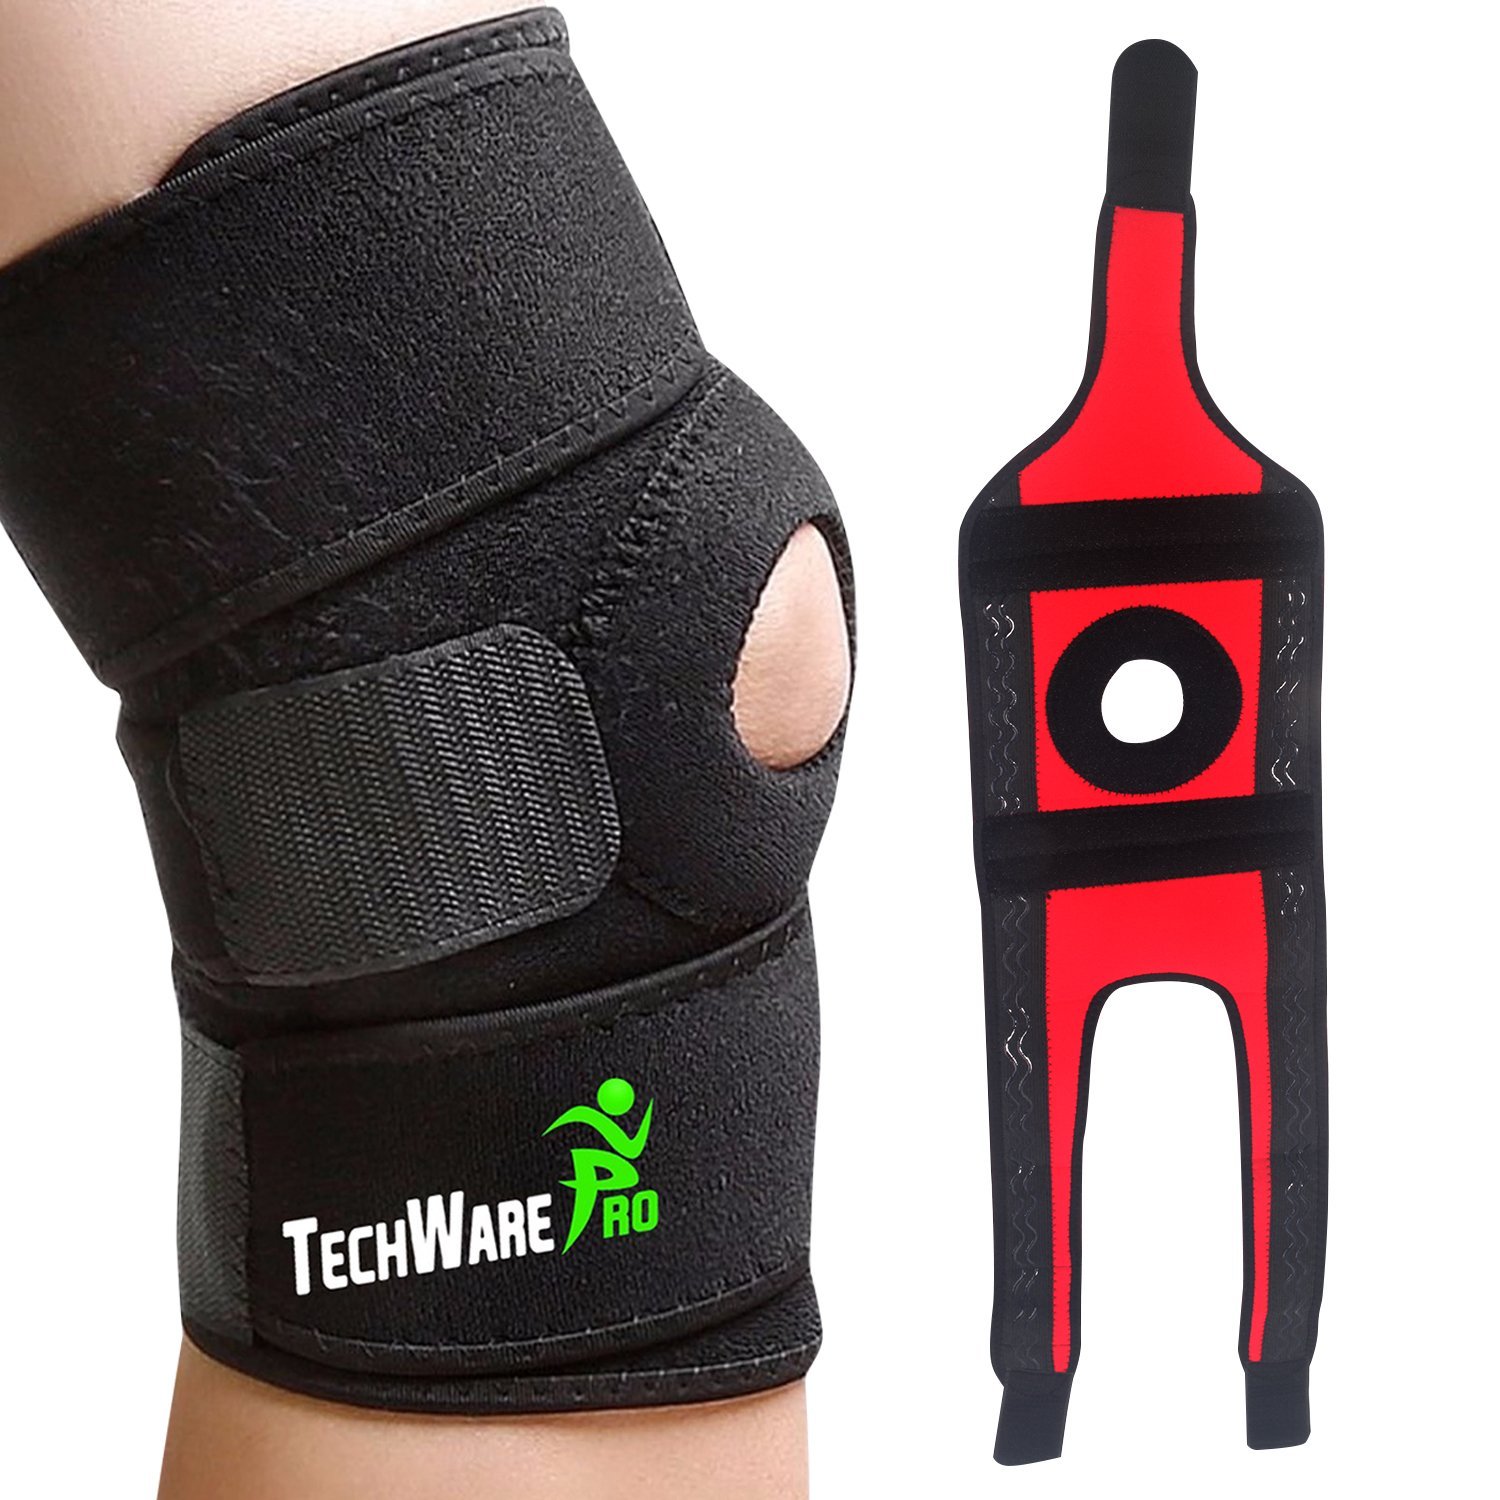 TechWare Pro Knee Brace Review